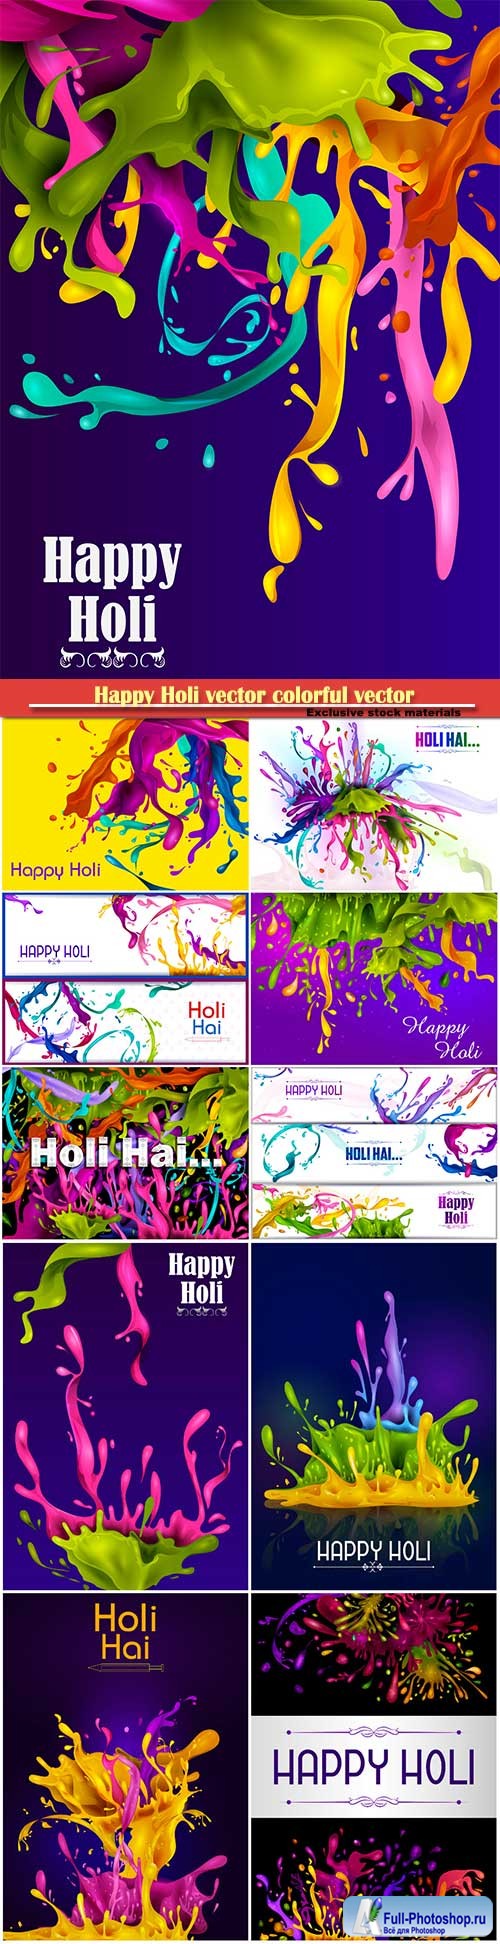 Happy Holi vector colorful vector illustration